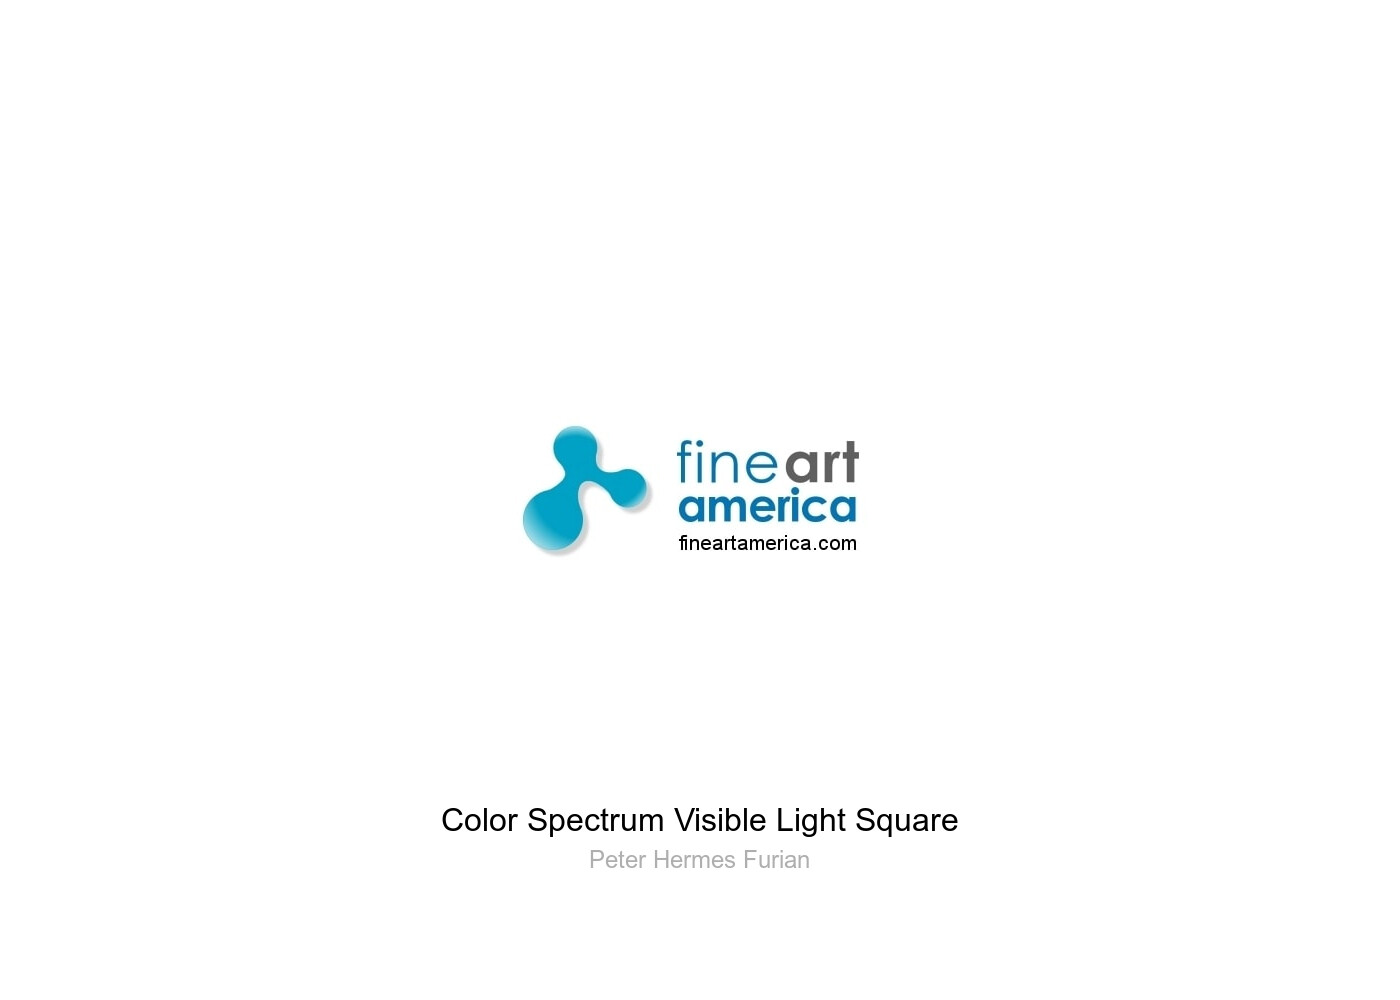 Color Spectrum Hundred Different Colors Digital Art by Peter Hermes Furian  - Fine Art America